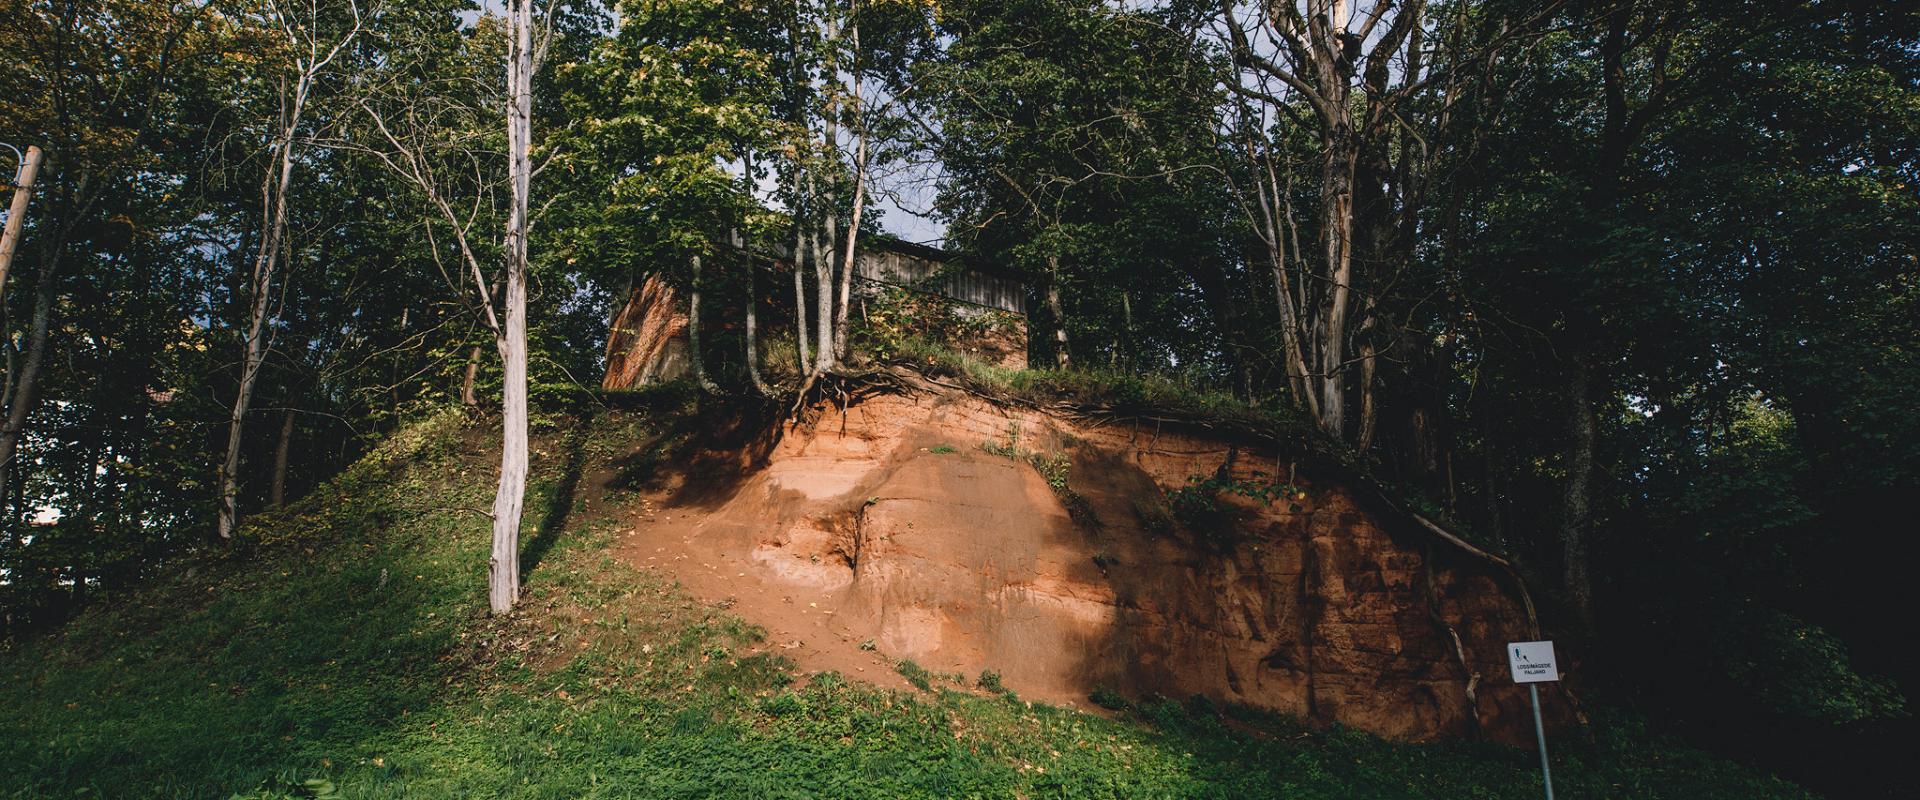 Sandstone outcrop in Viljandi Castle Park